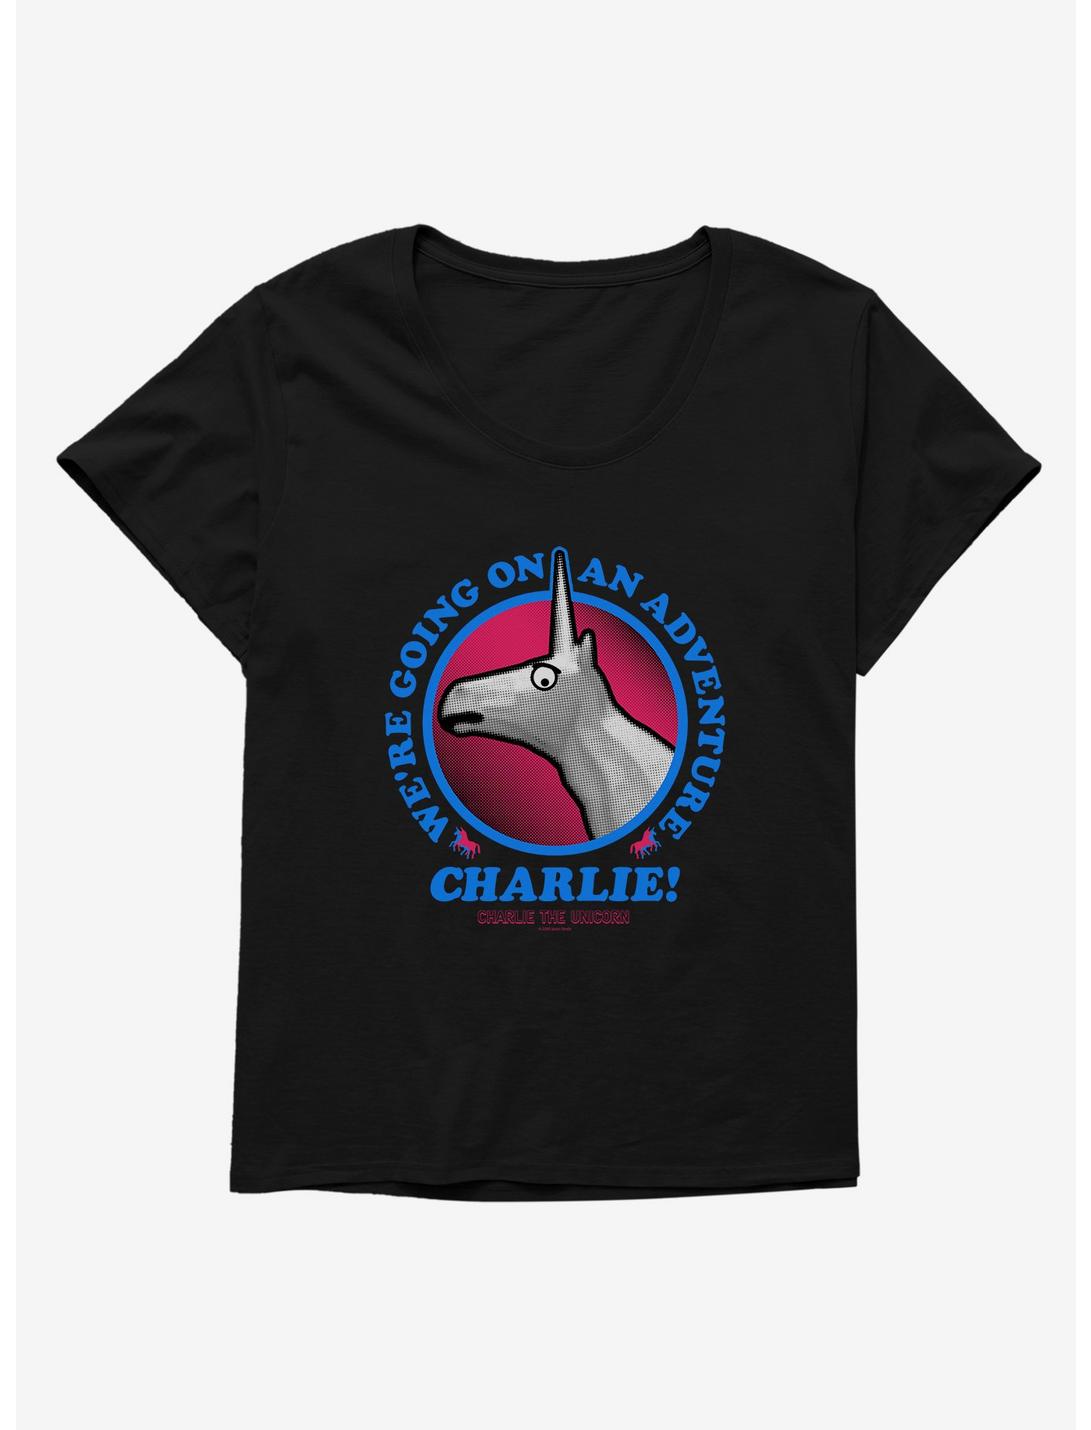 Charlie The Unicorn Adventure Charlie! Womens T-Shirt Plus Size, BLACK, hi-res